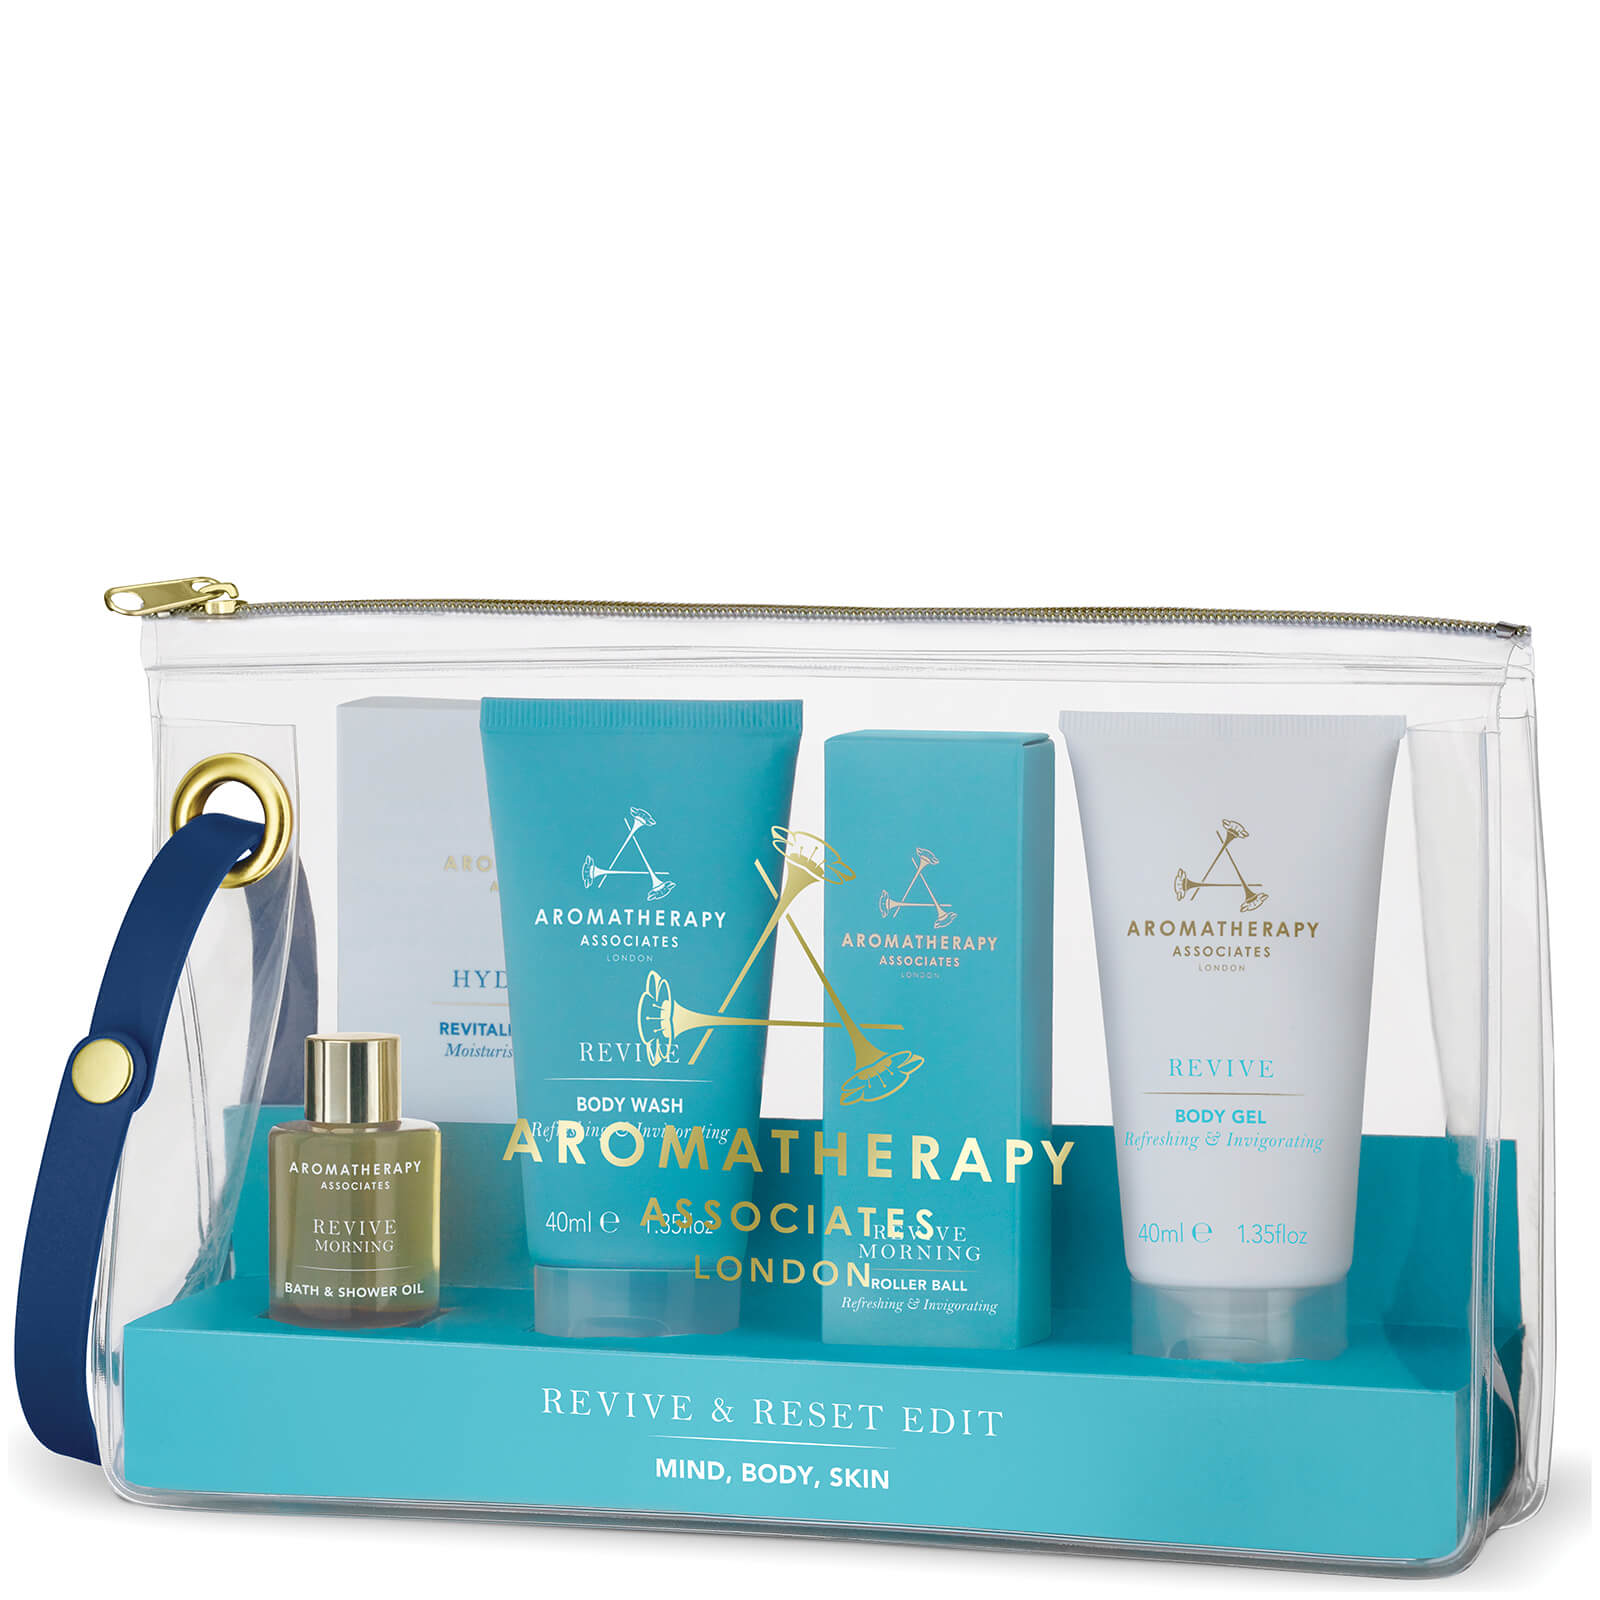 Aromatherapy Associates Bath & Body Revive & Reset Edit Gift Set